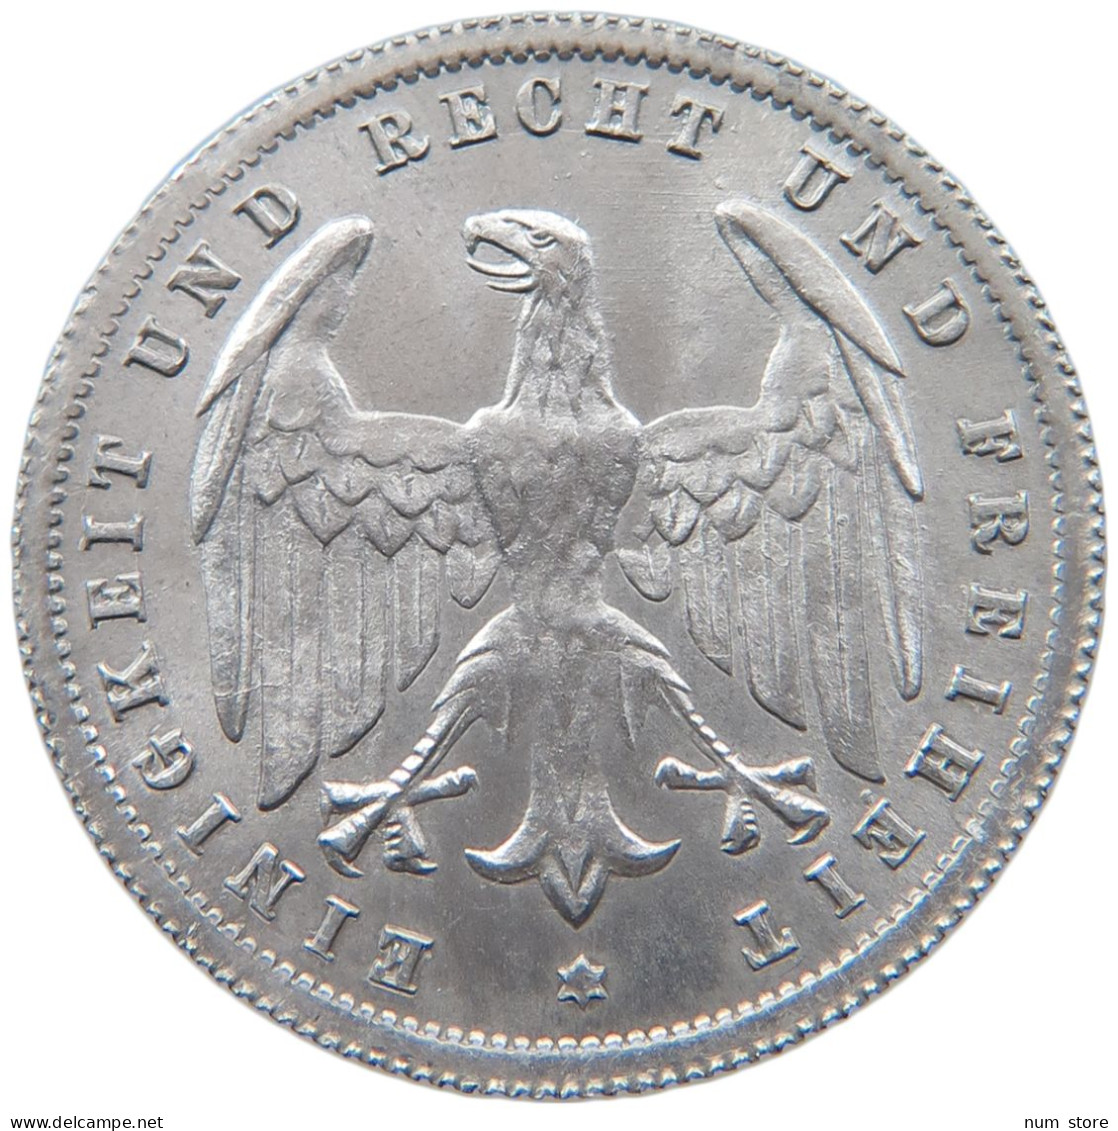 WEIMARER REPUBLIK 500 MARK 1923 F  #MA 098587 - 200 & 500 Mark